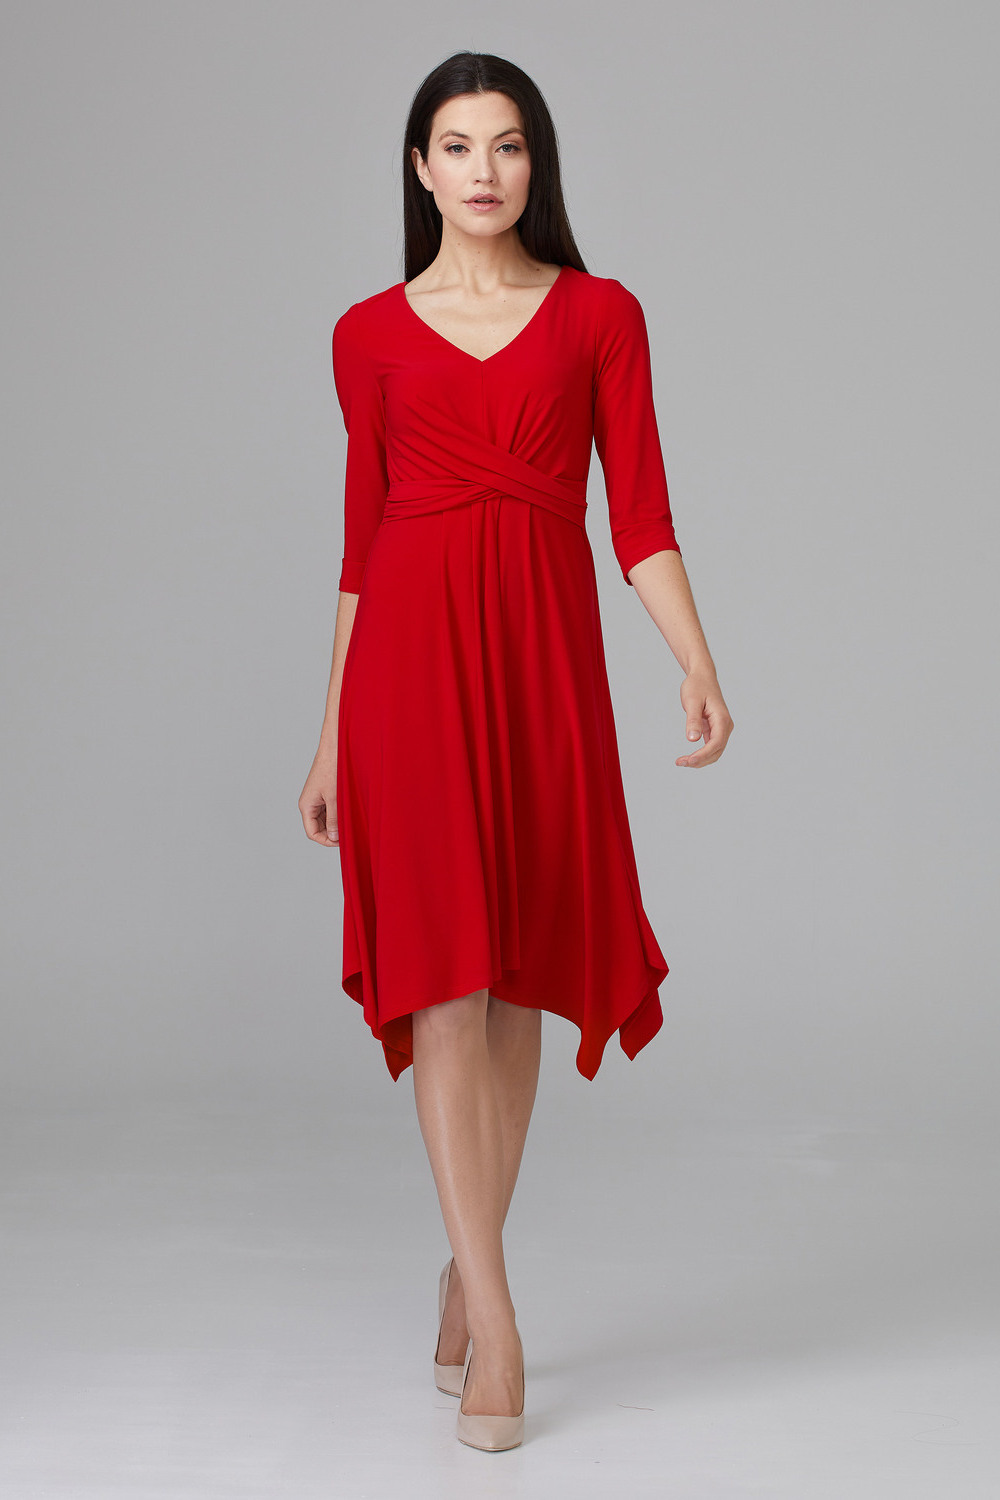 Joseph Ribkoff Dress Style 201295. Lipstick Red 173